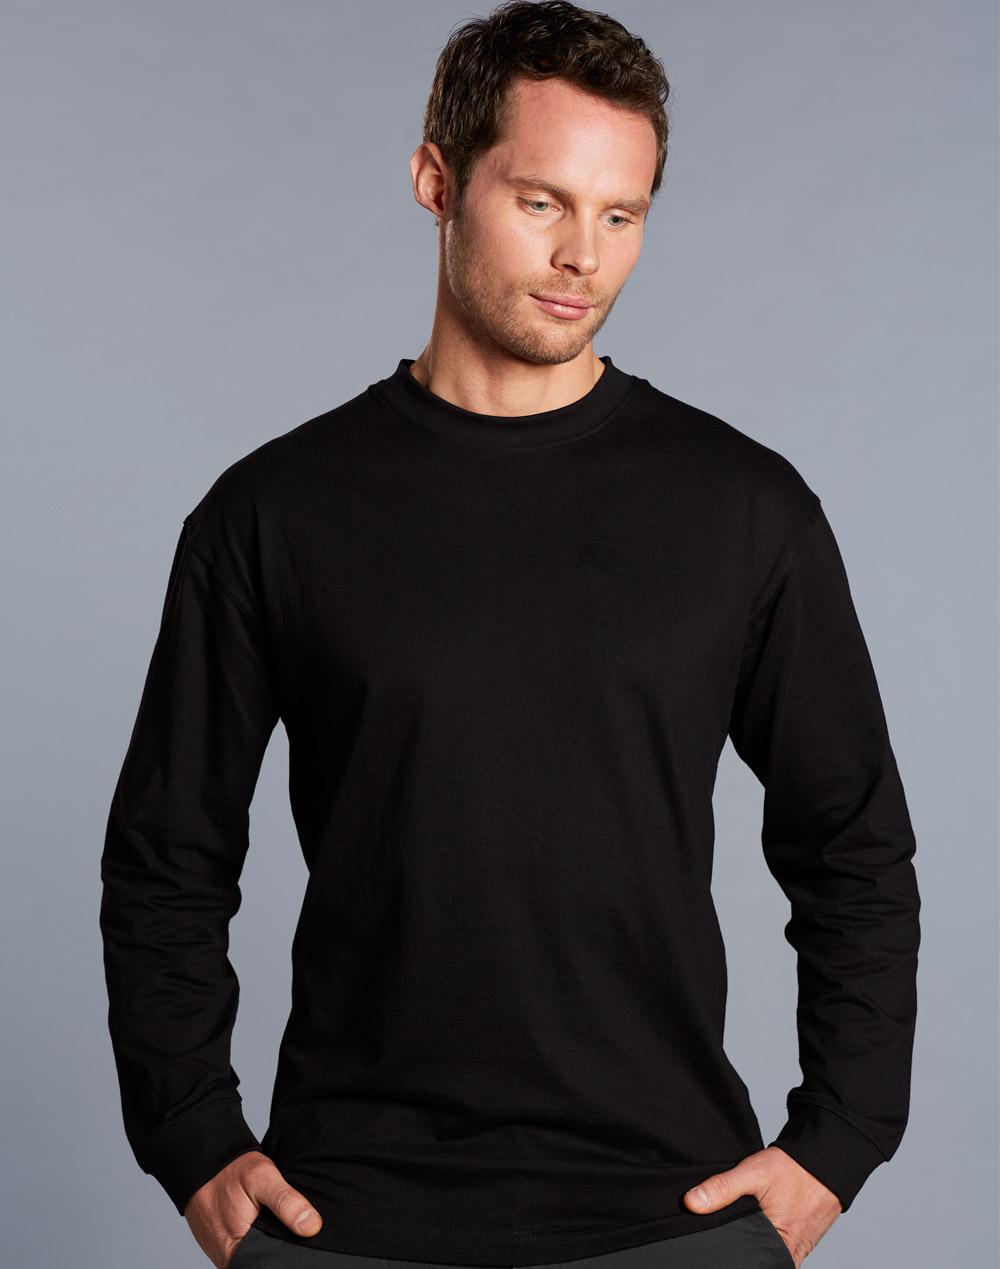 Custom Made Men's London Long Sleeve Crew Neck T-Shirts Online Australia